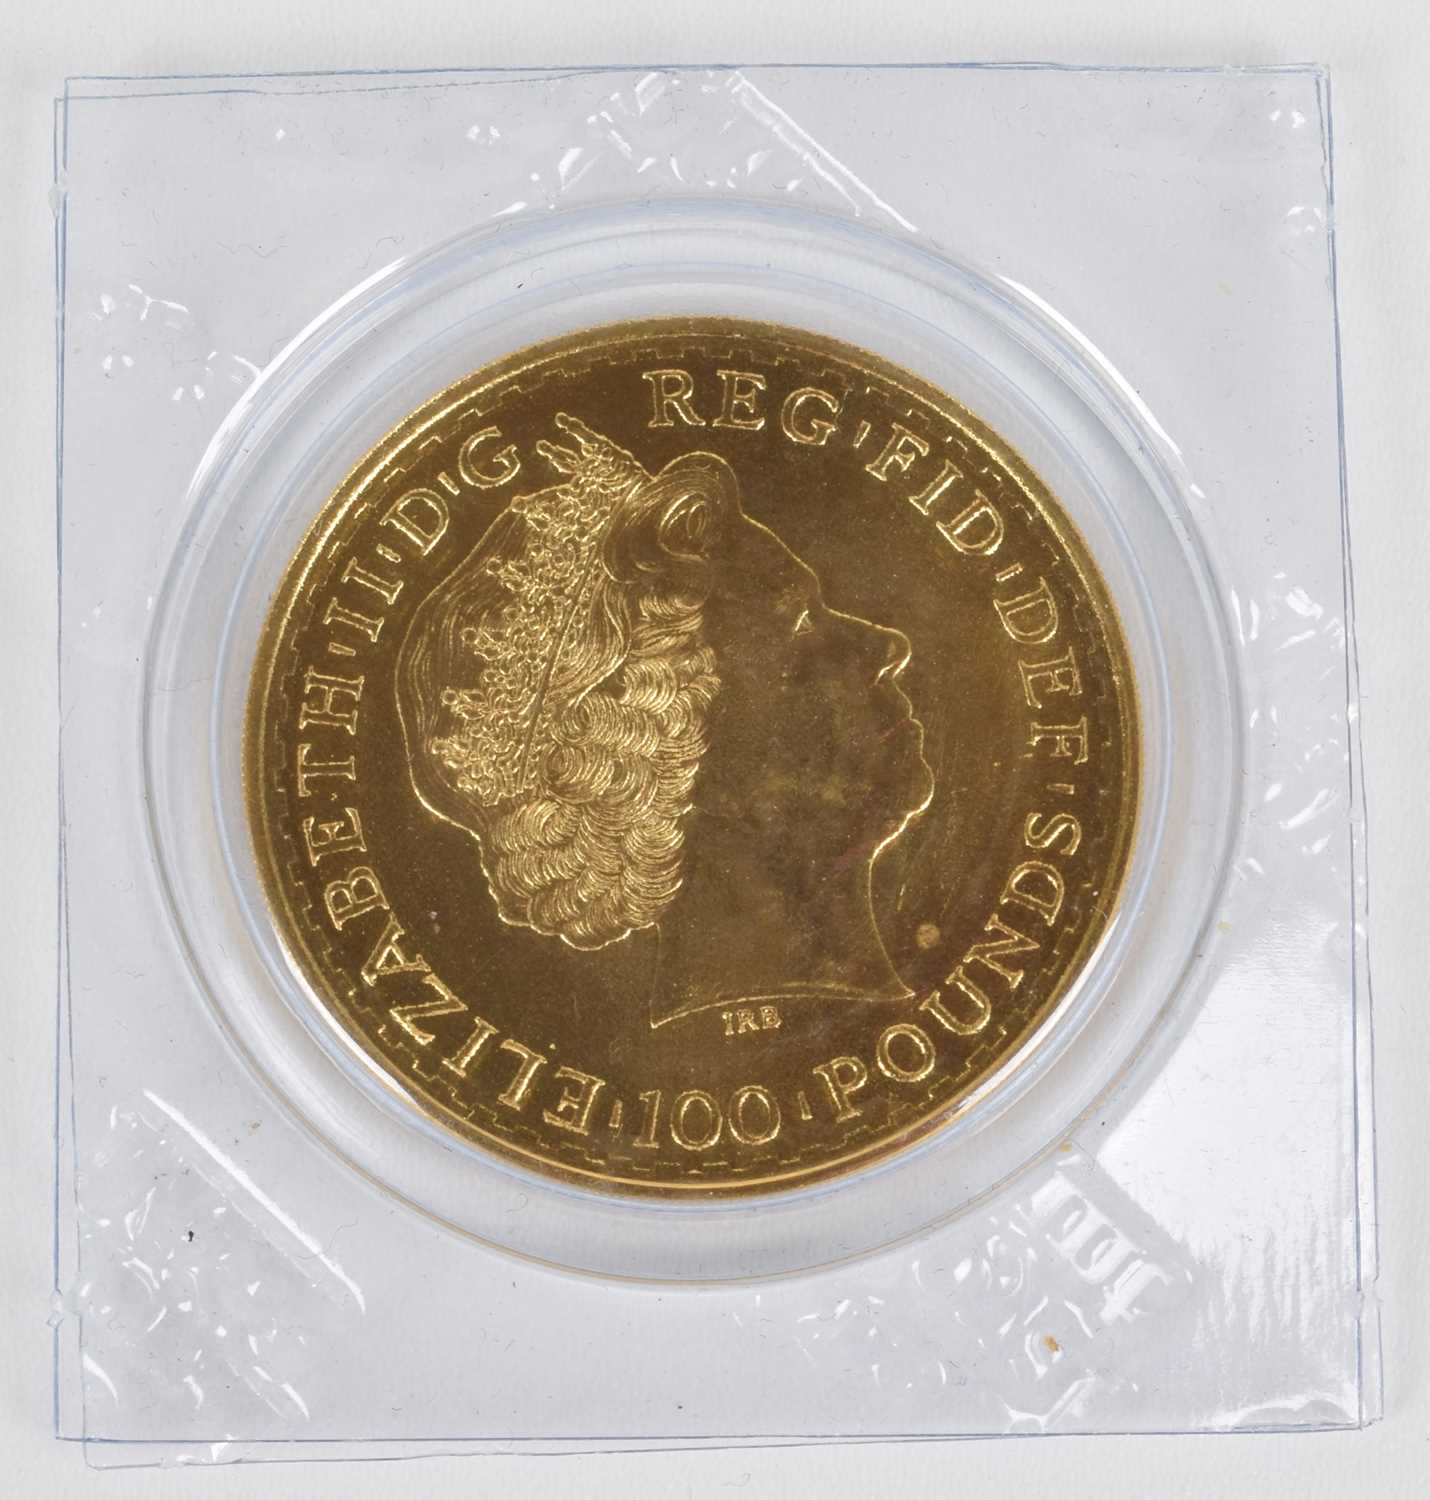 Queen Elizabeth II, 2013 Gold 1oz Britannia, 100 Pounds.